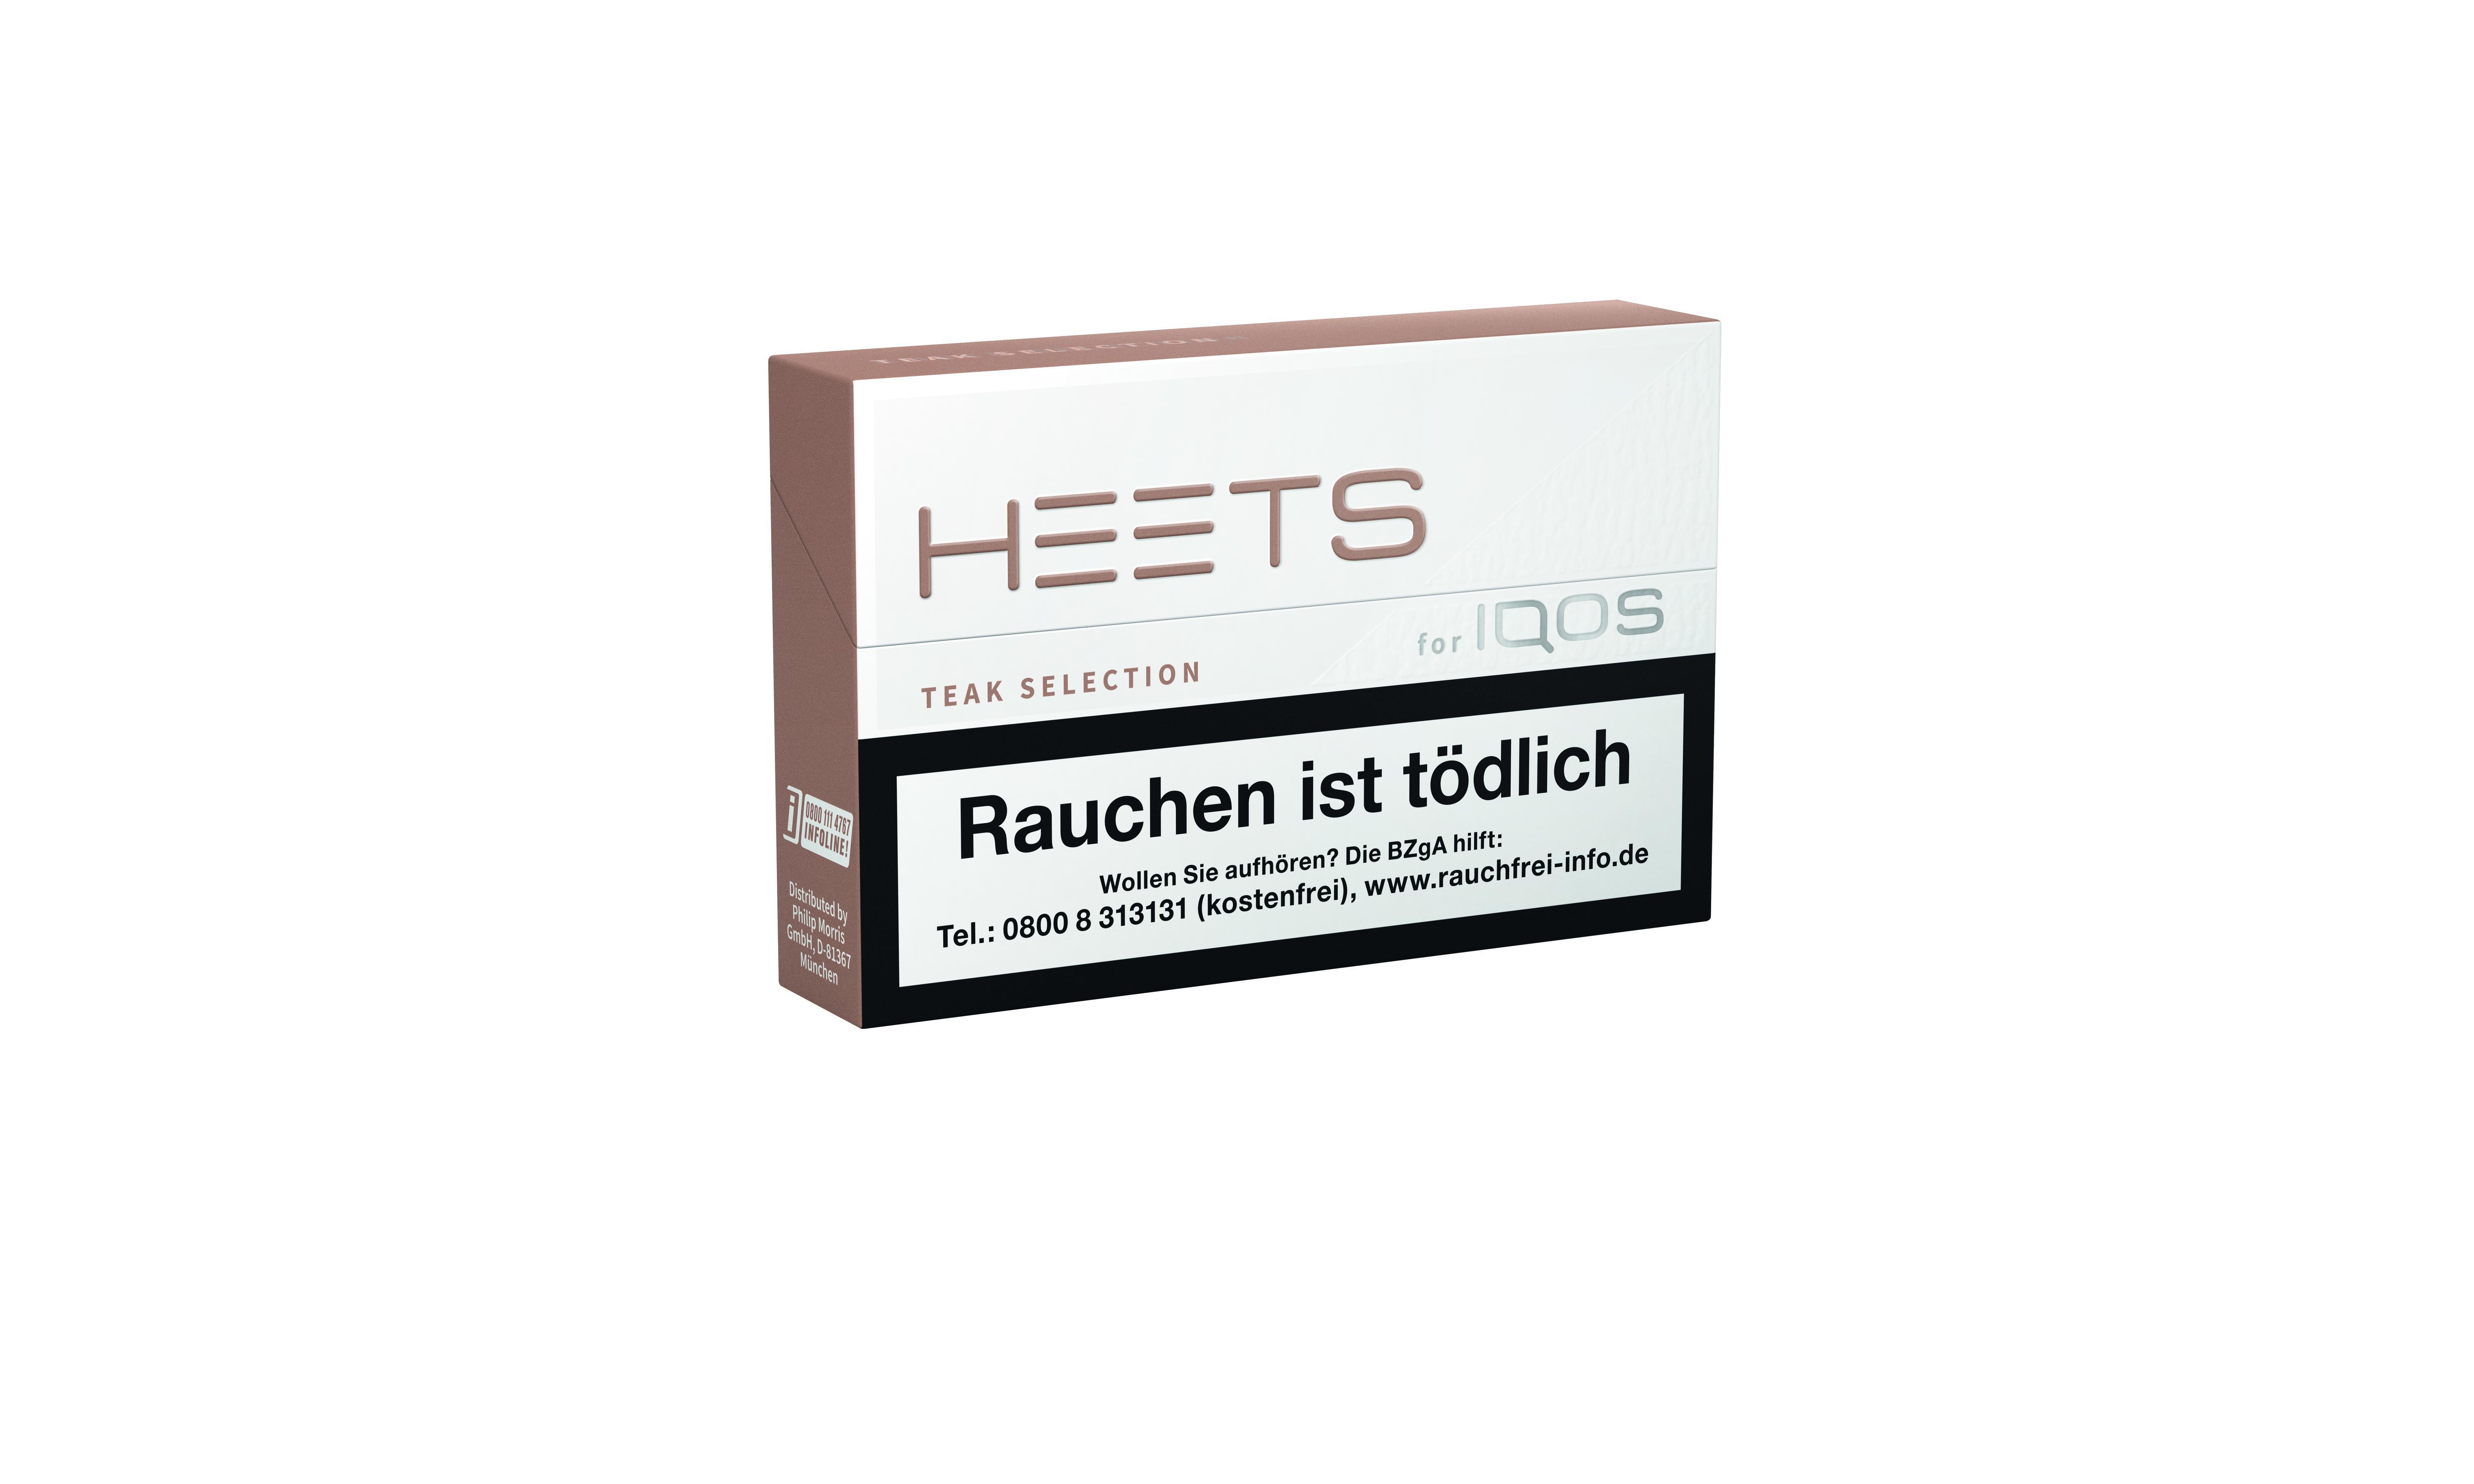 HEETS Teak Selection| 1 x 20 Tobacco Sticks | 6 Euro pro Packung